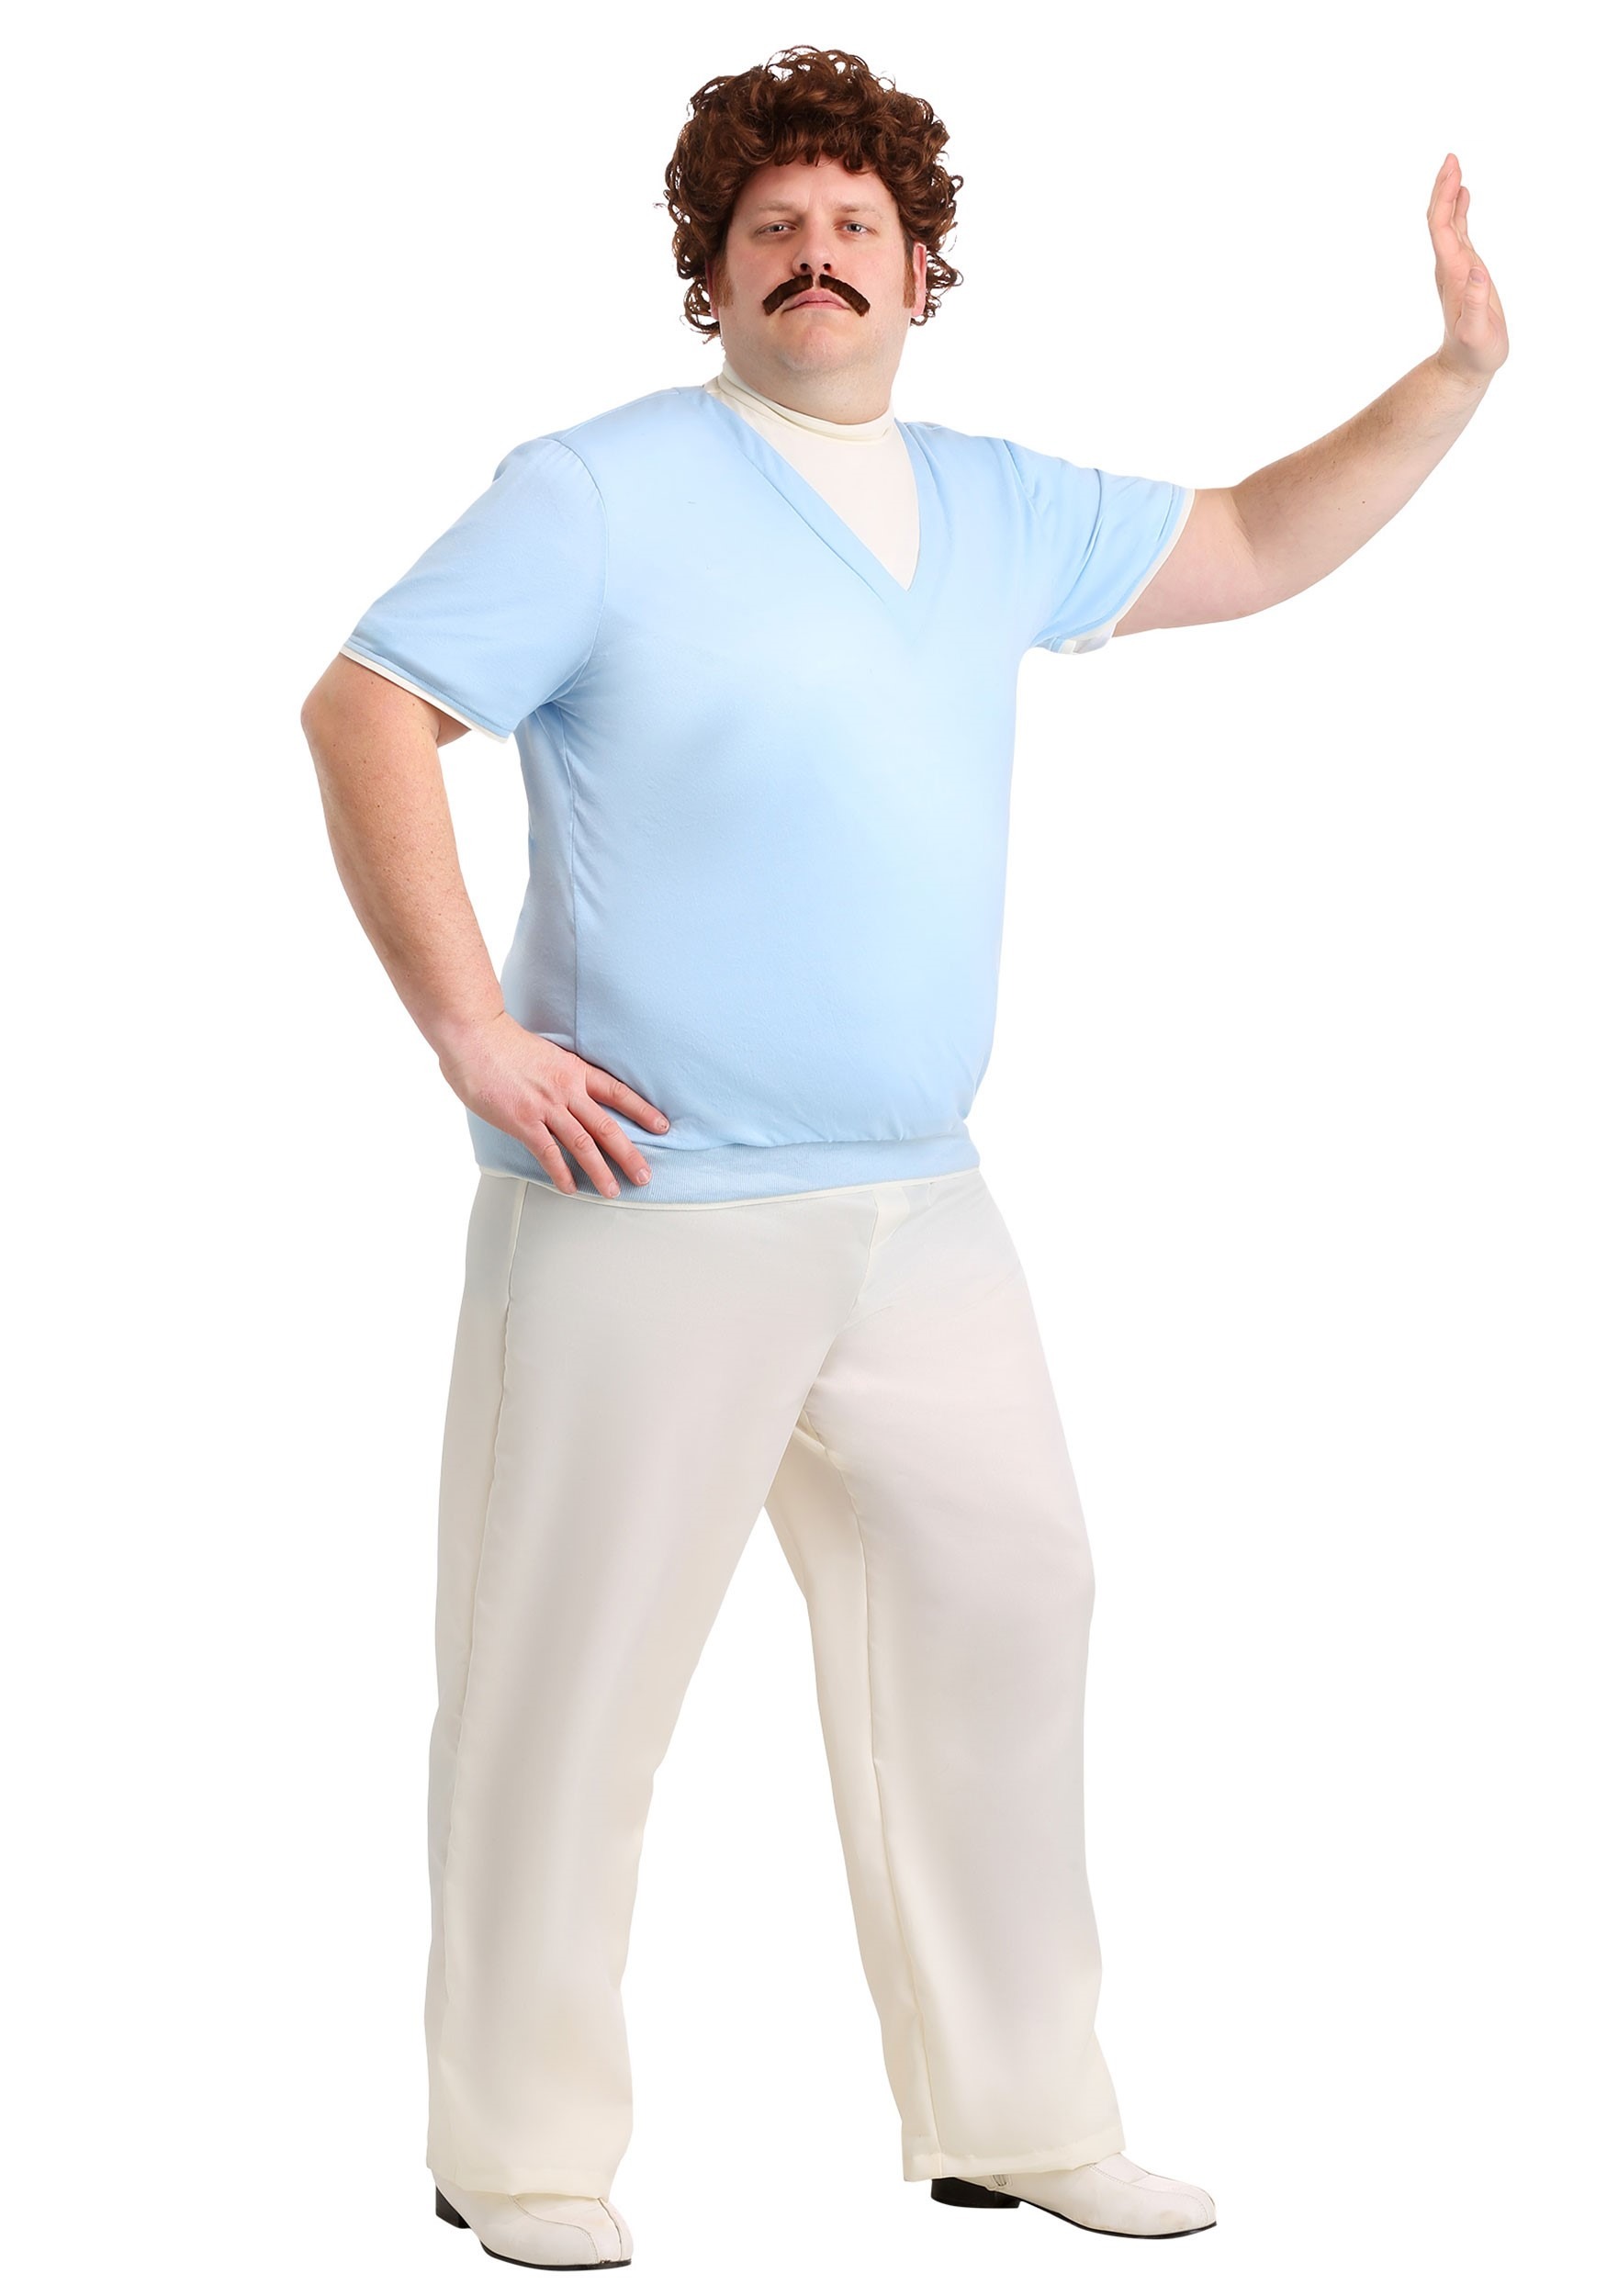 Photos - Fancy Dress Leisure FUN Costumes Plus Size Men's Nacho Libre  Costume White/Blue FU 